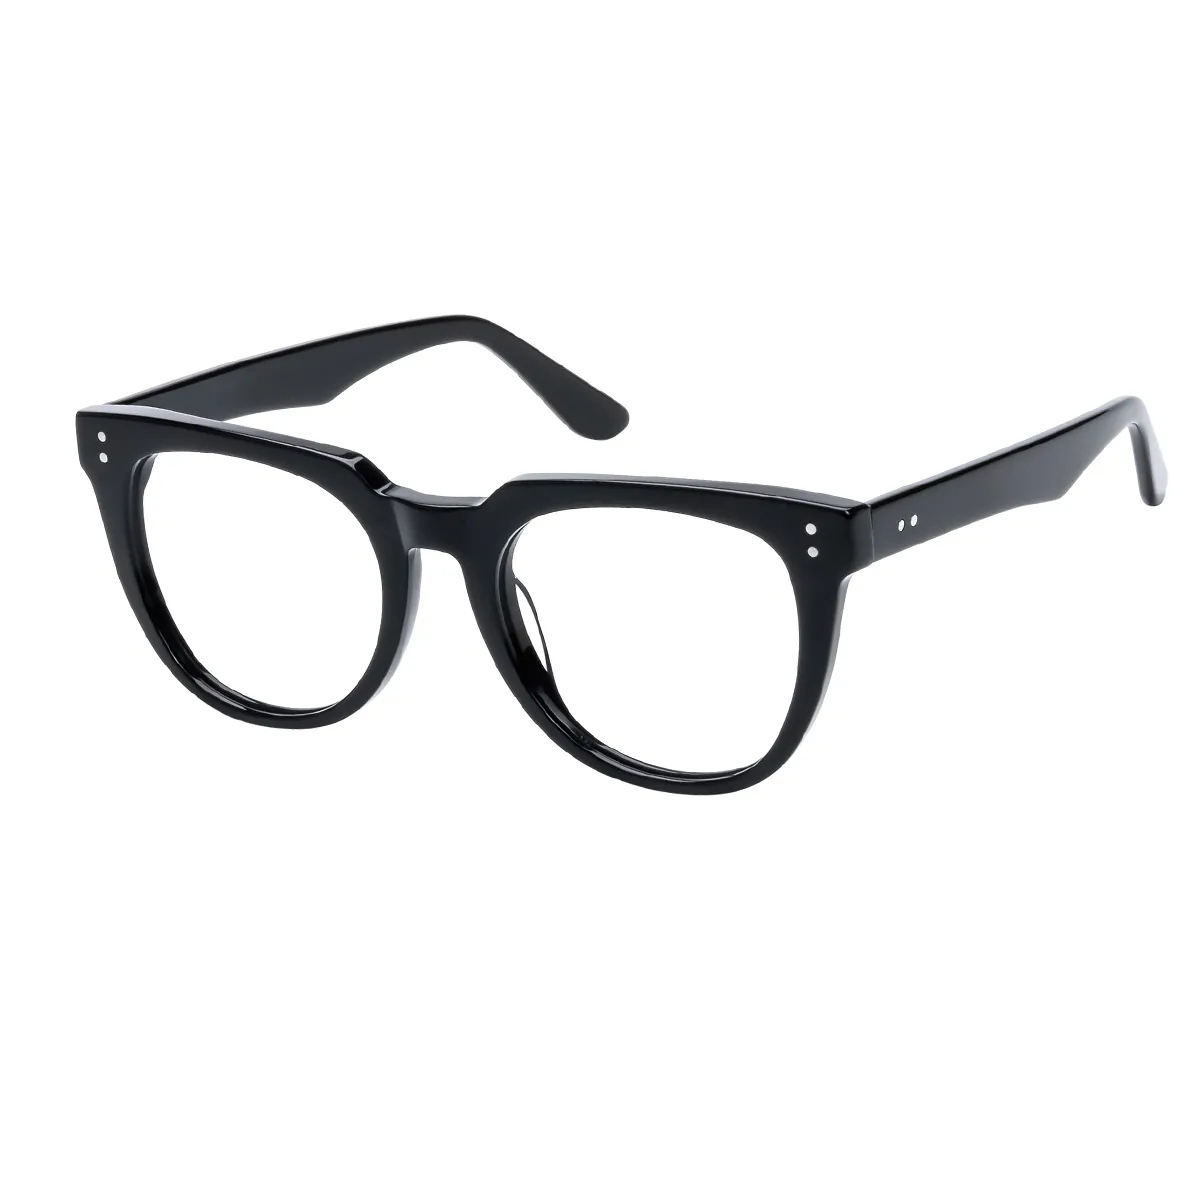 Dara - Square Black Glasses for Men & Women - EFE